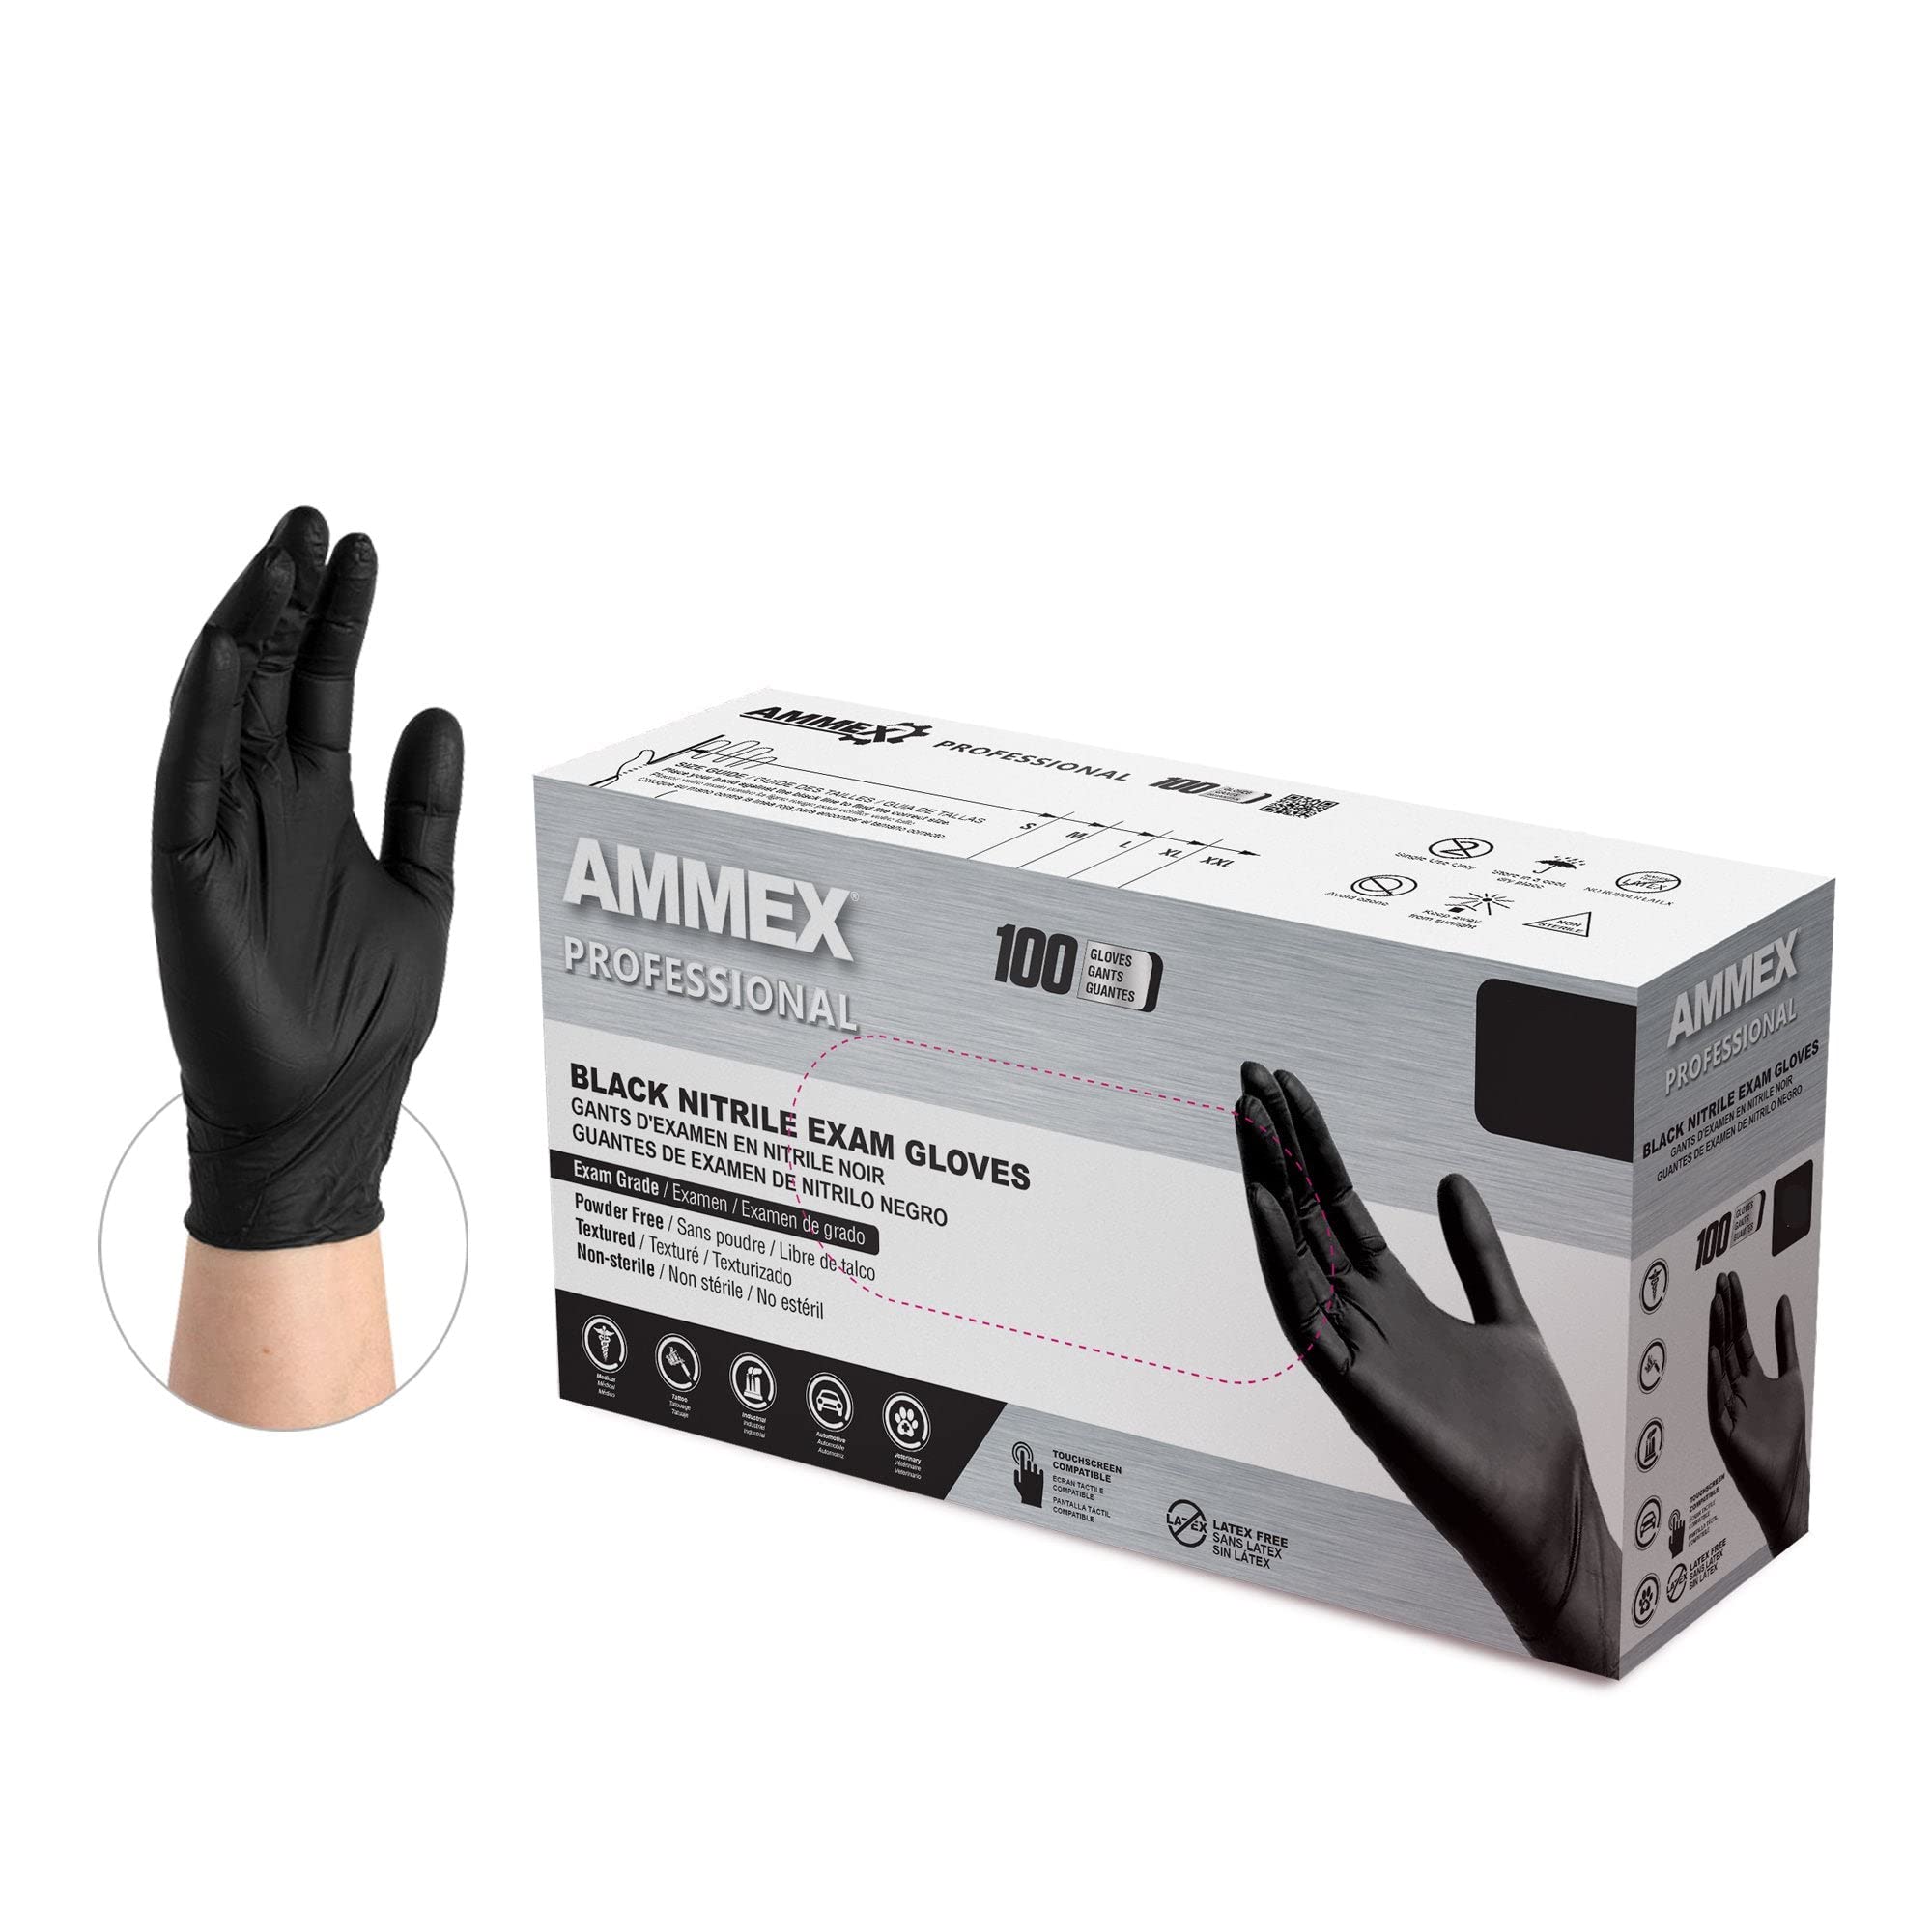 Ammex قفازات سوداء طبية / نيتريل للاستعمال مرة واحدة خالية من اللاتكس وخالية من المسحوق